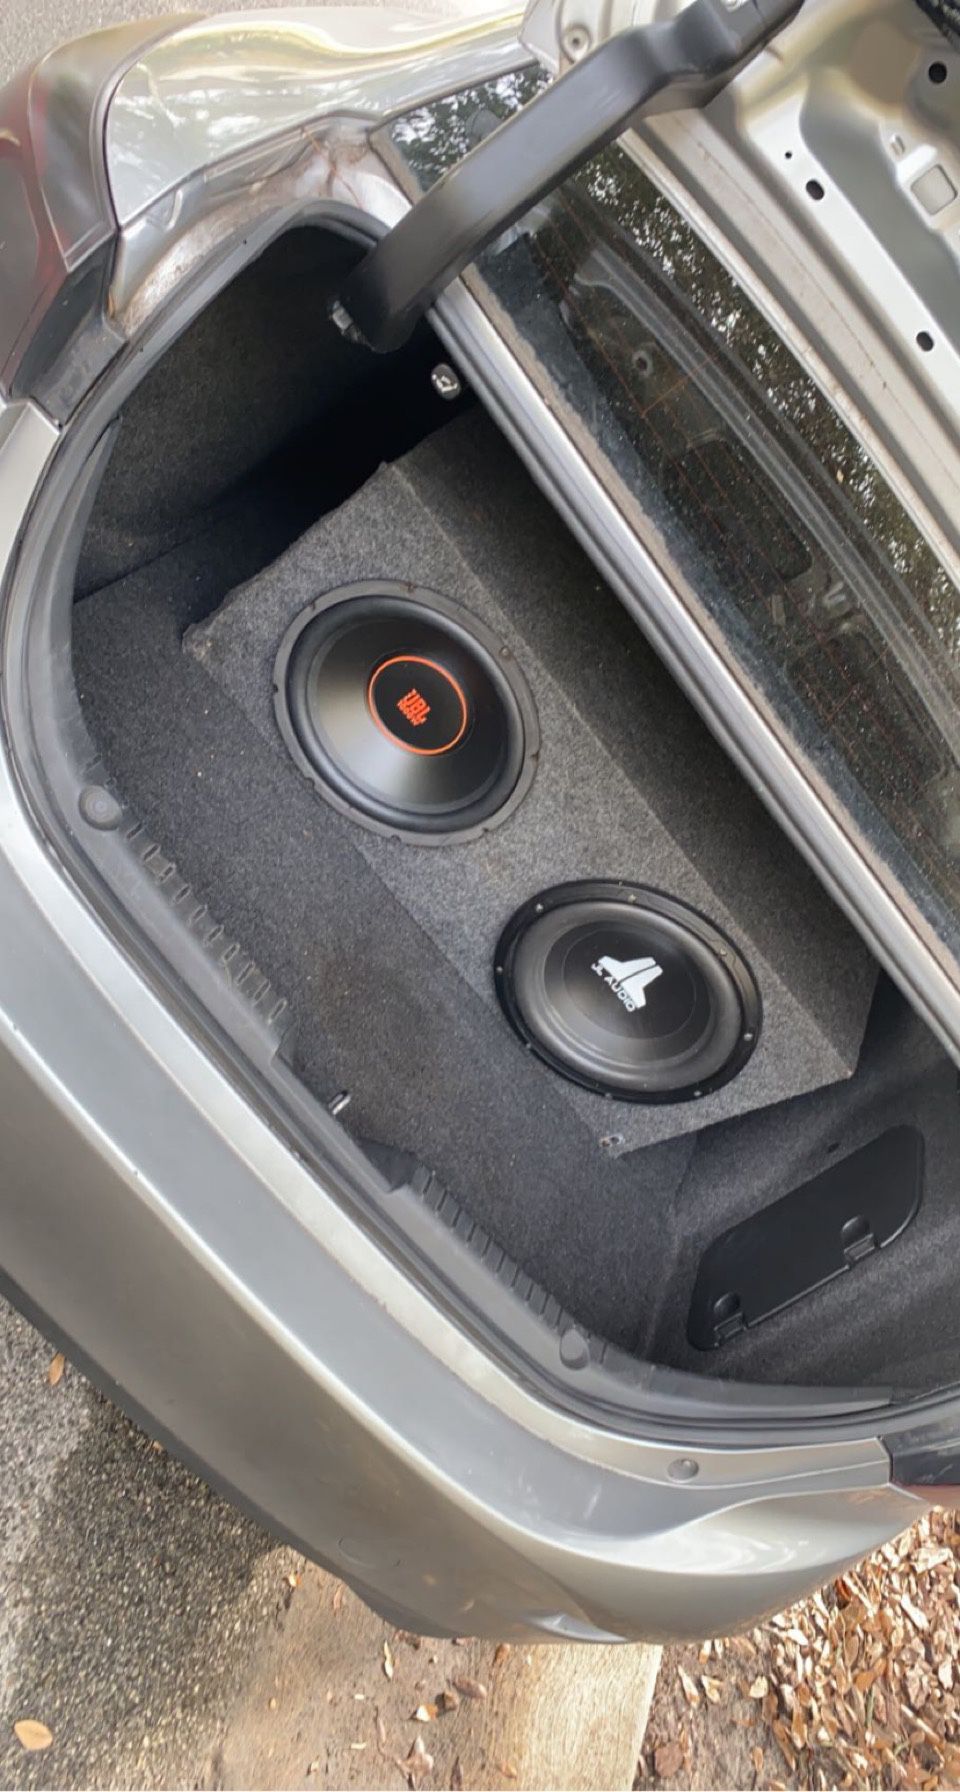 2 12” Subs Subwoofers in Sealed Enclosure Car Audio